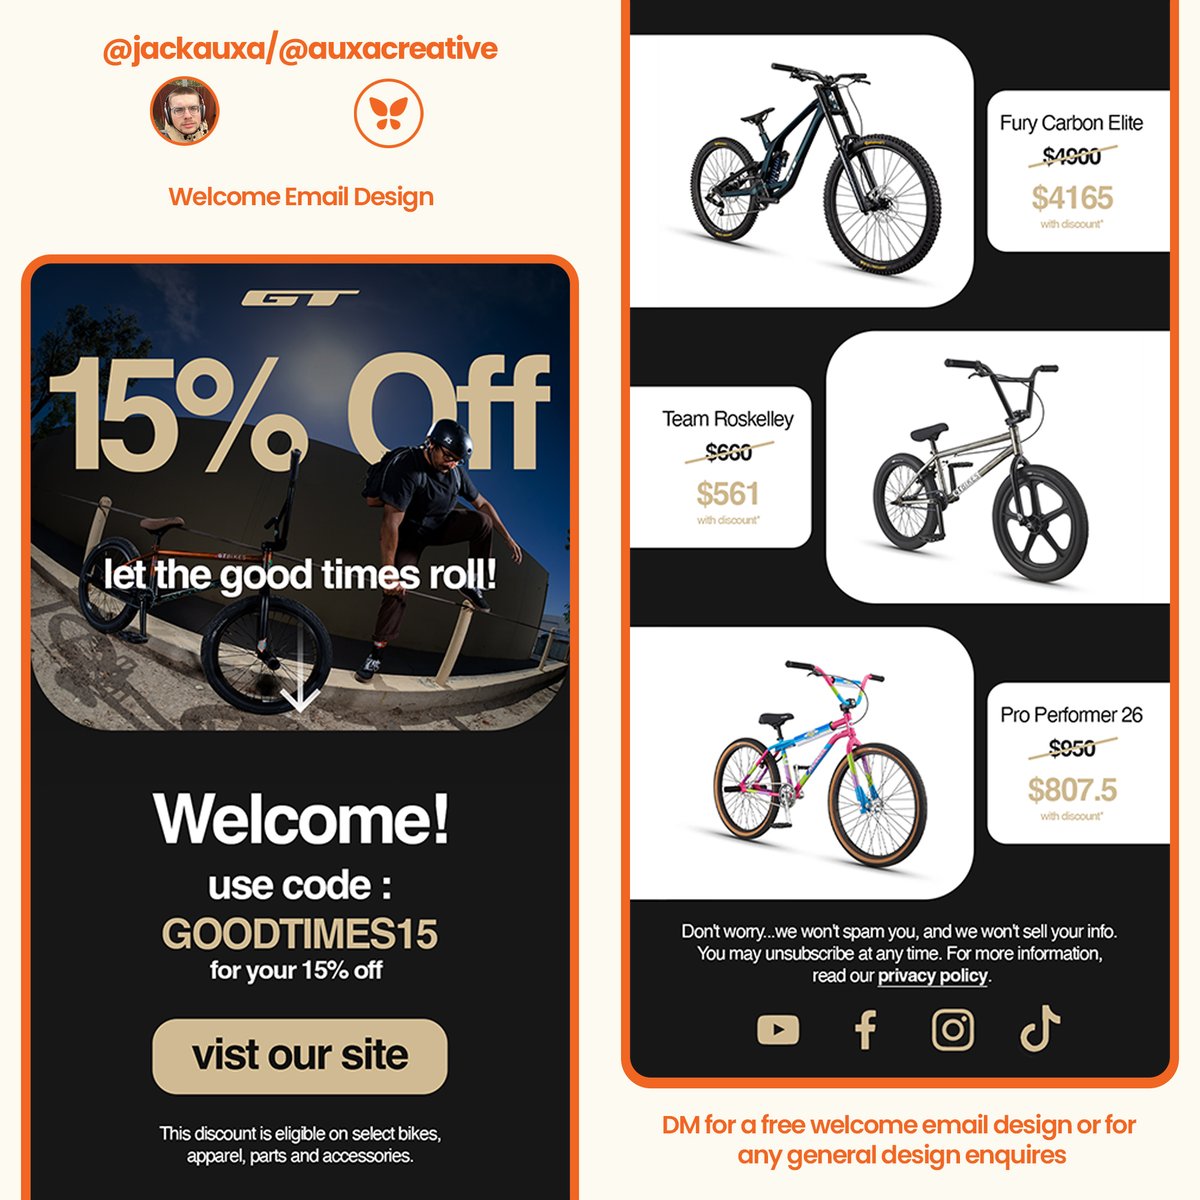 Full GT Bike Welcome Email Design 🚴‍♀️💻

#EmailMarketing